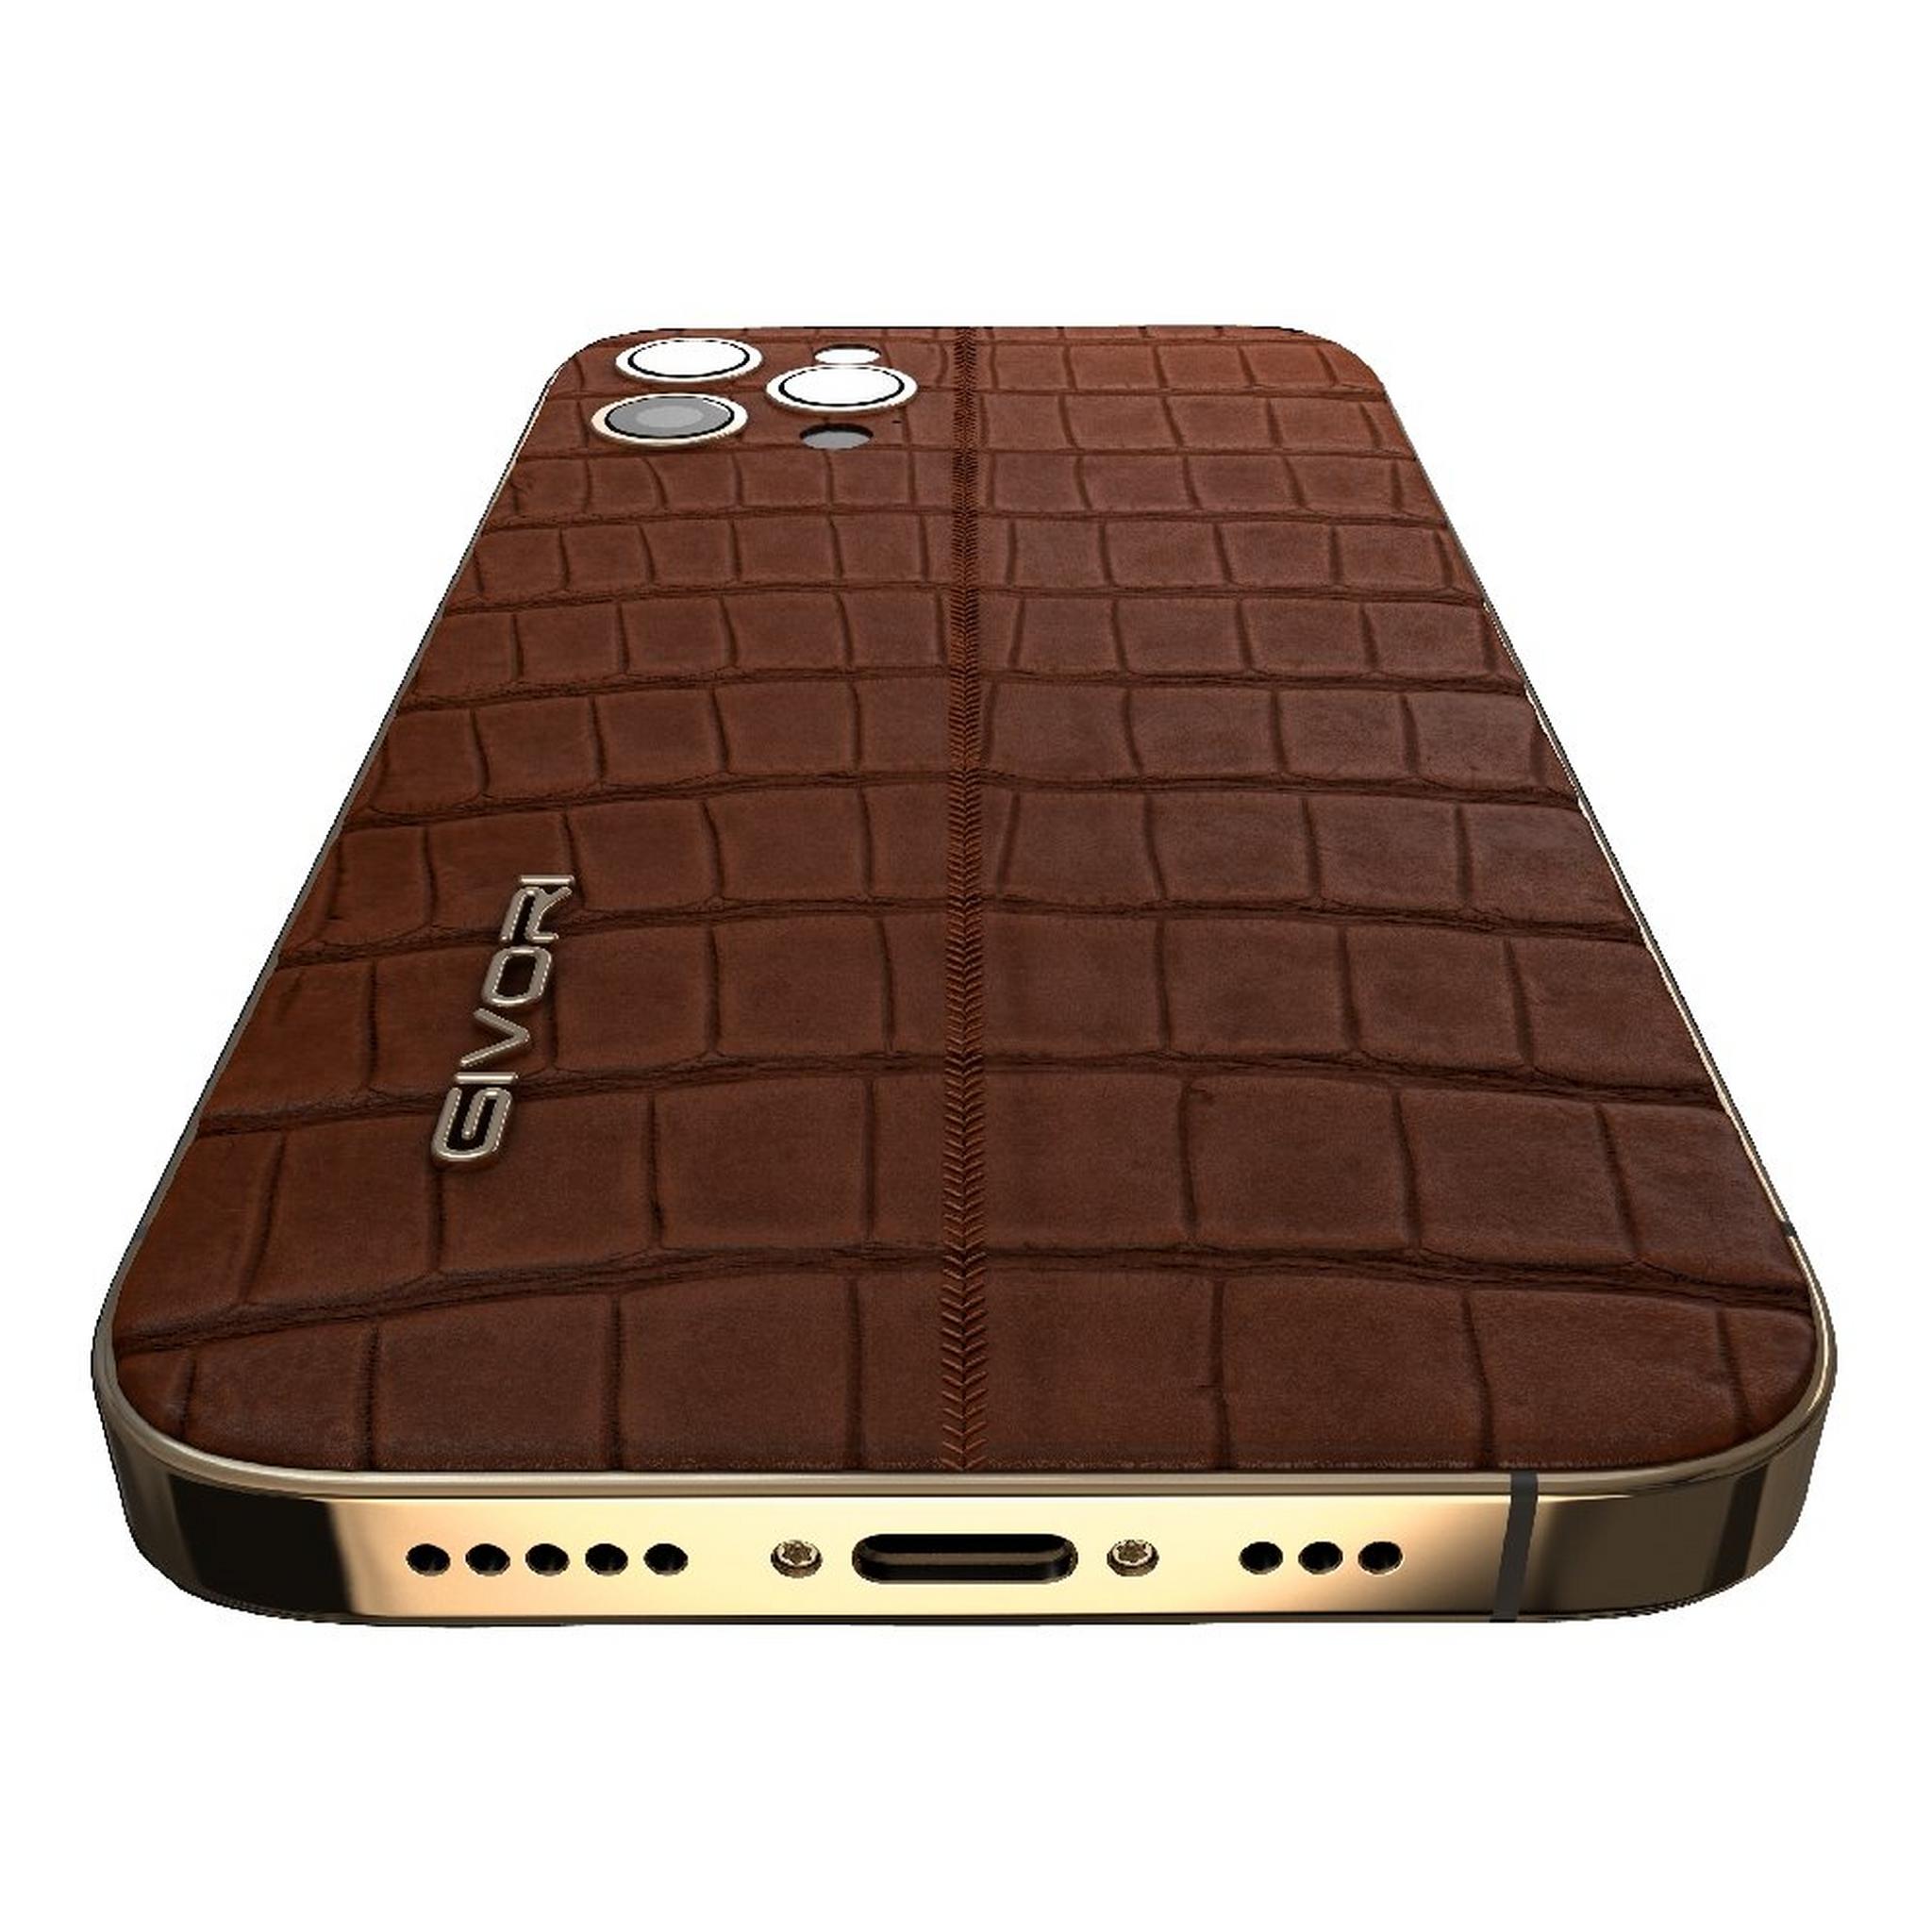 Givori iPhone 13 Pro Max 512GB - Alligator Cigar